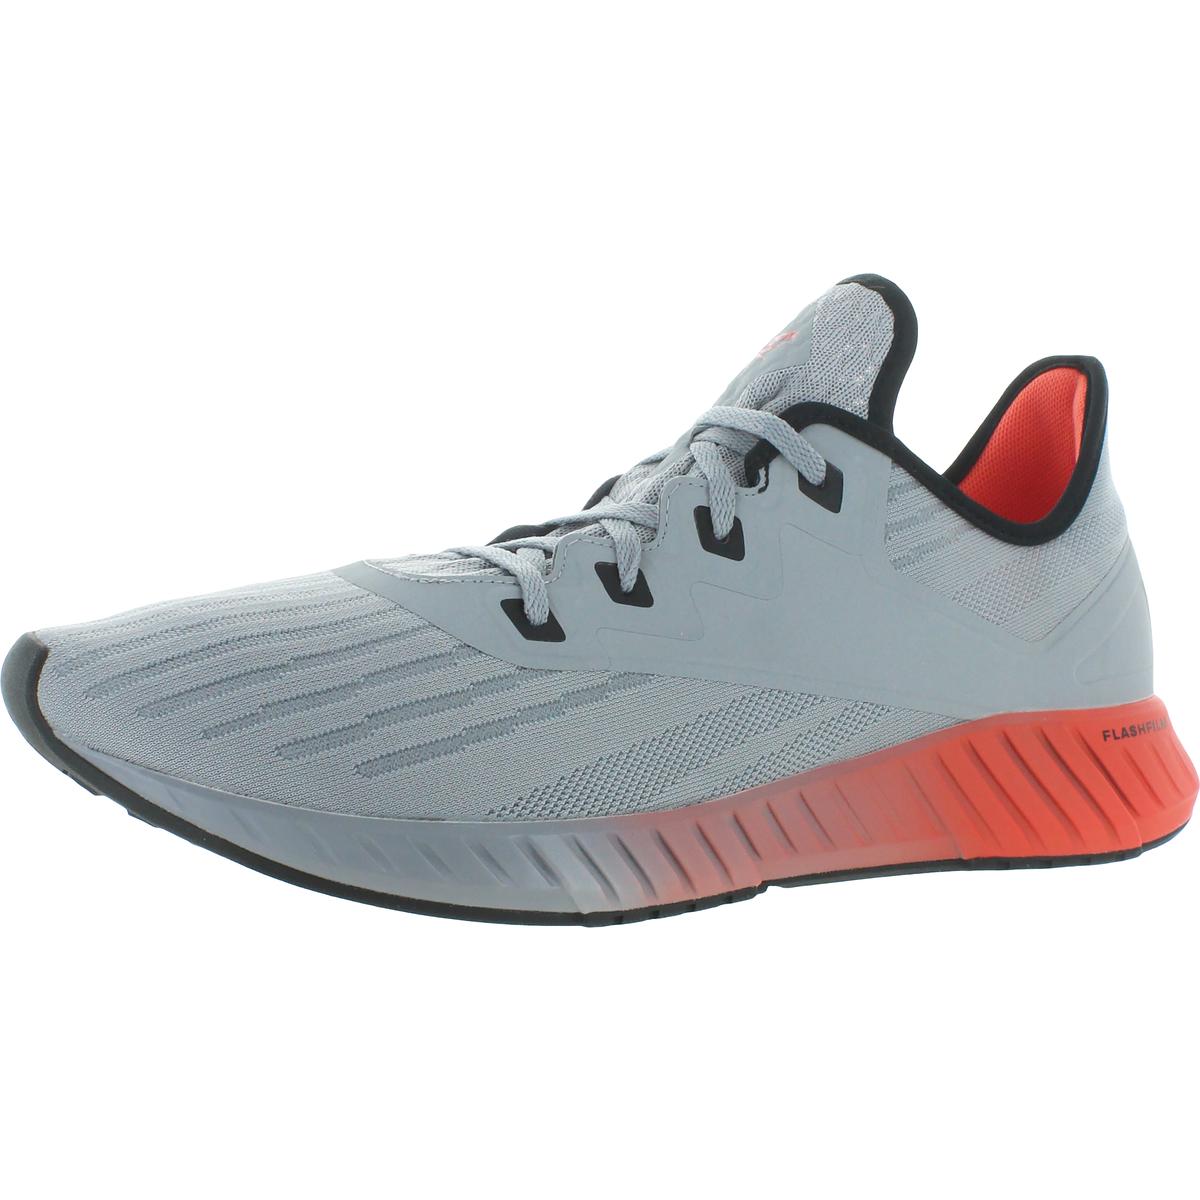 Reebok Mens Flash Film 2.0 Performance Sneakers Running Shoes Athletic ...